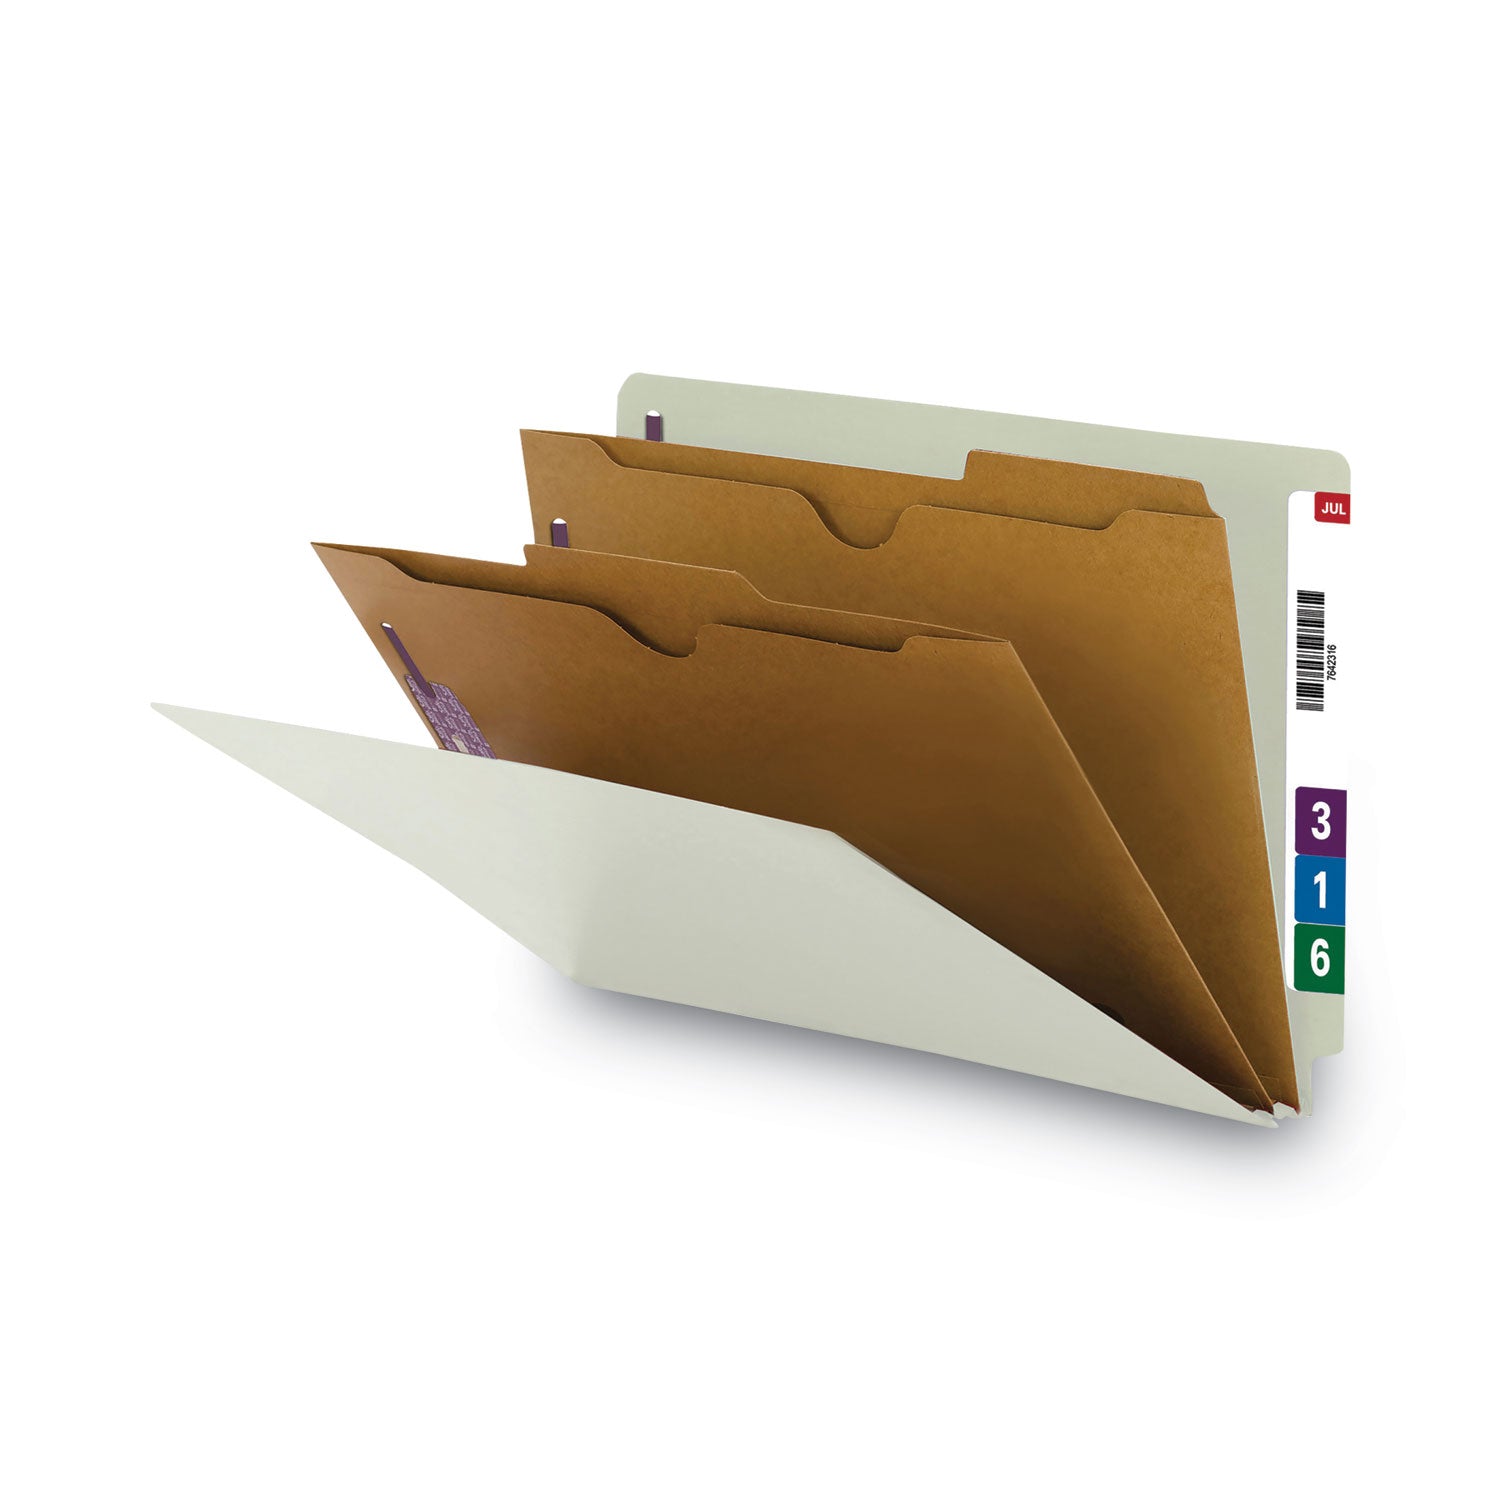 X-Heavy End Tab Pressboard Classification Folders, Six SafeSHIELD Fasteners, 2 Dividers, Legal Size, Gray-Green, 10/Box - 